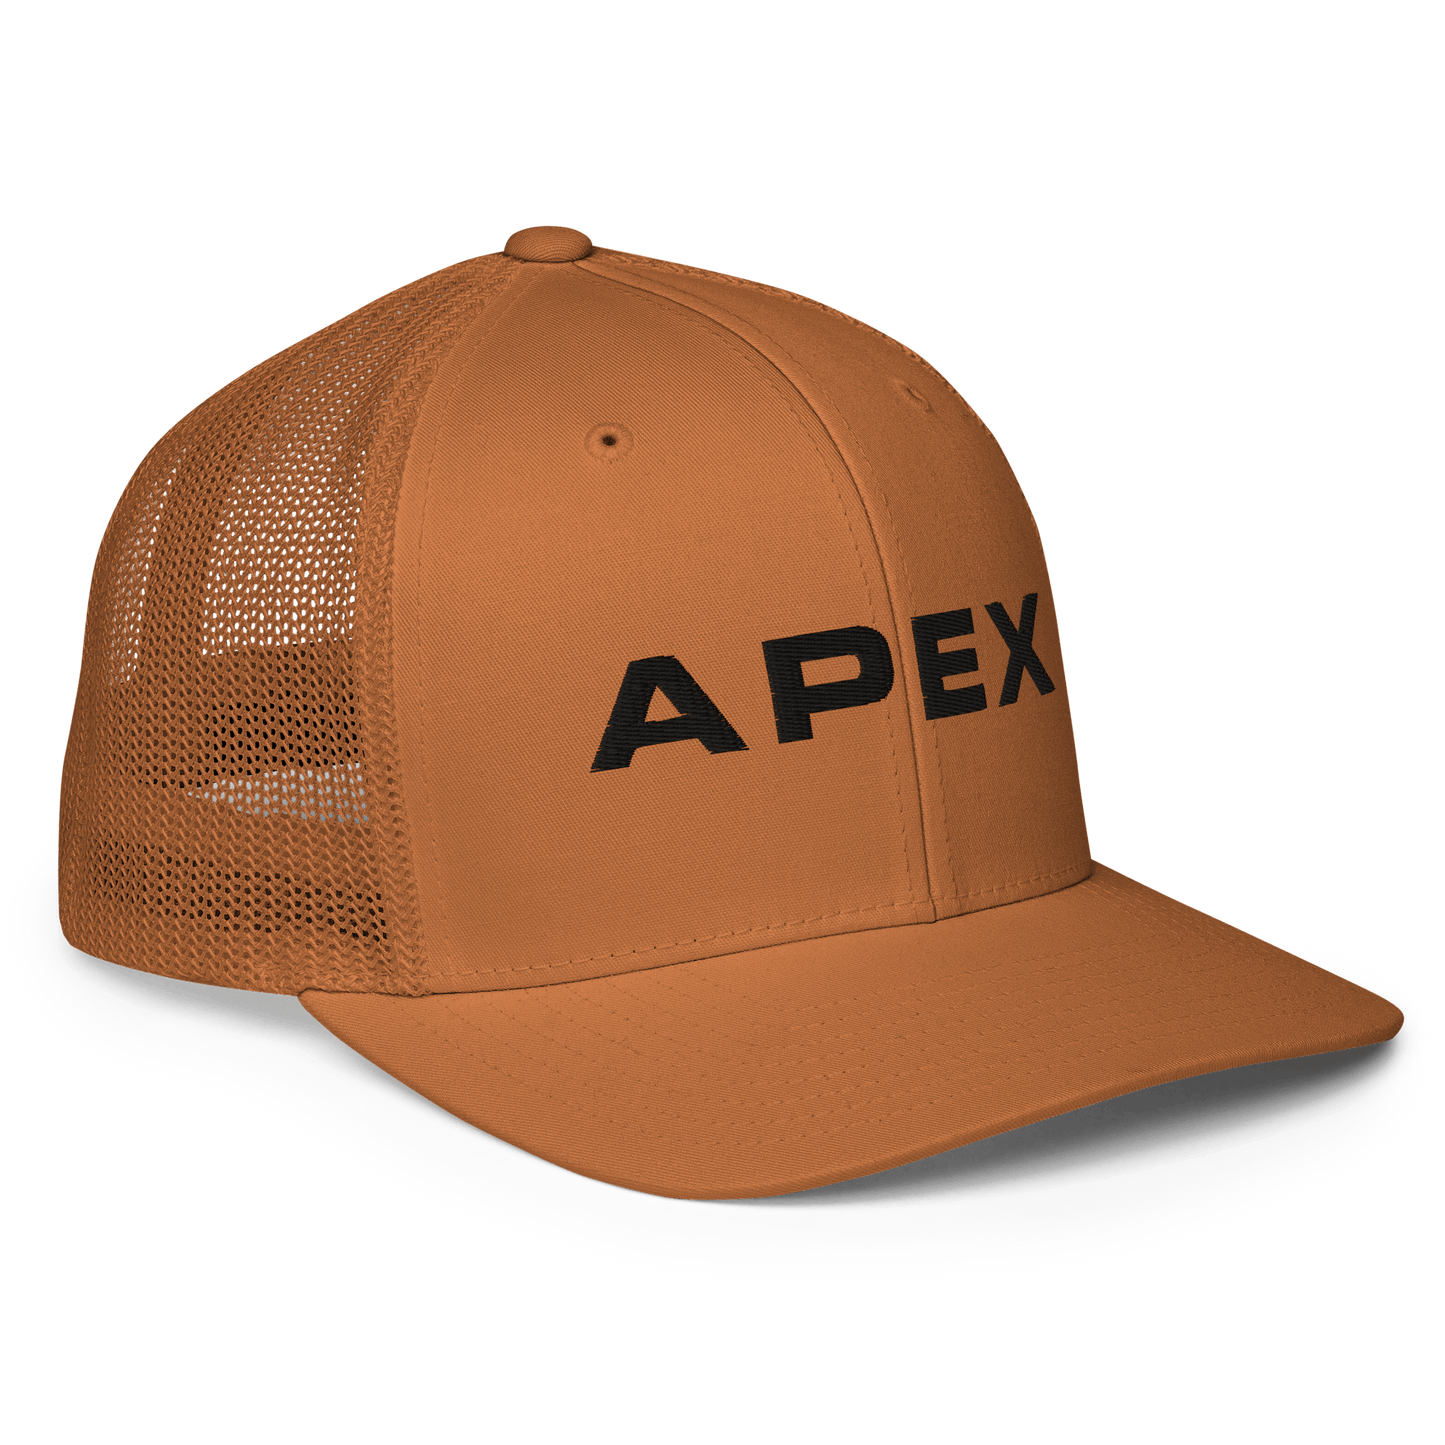 APEX MESH BACK TRUCKER CAP